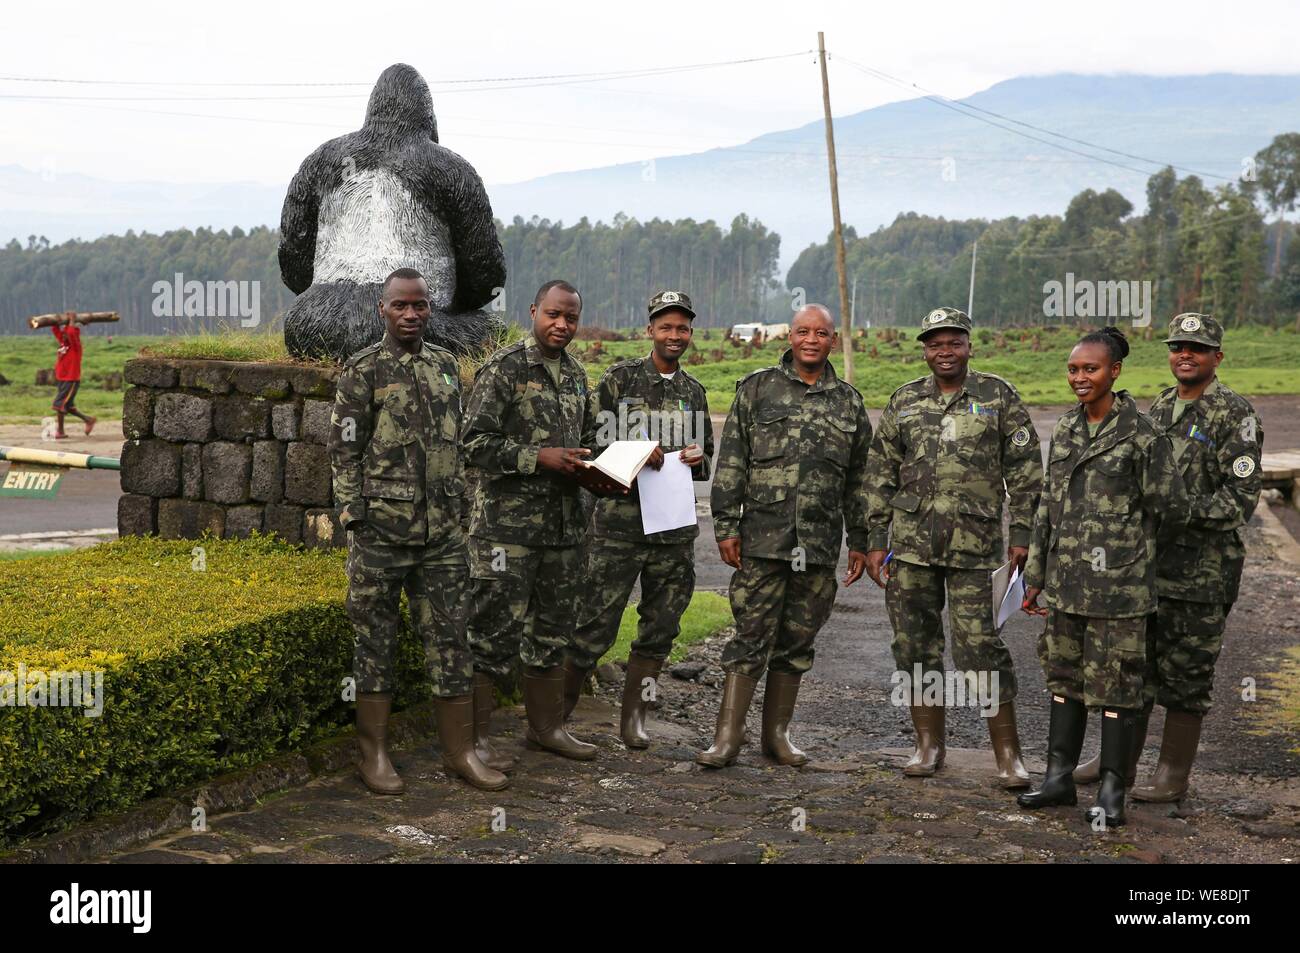 Rwanda, Volcanoes National Park, lattice rangers at the entrance of Volcanoes National Park posing in front of a giant statue of mountain gorilla Stock Photo